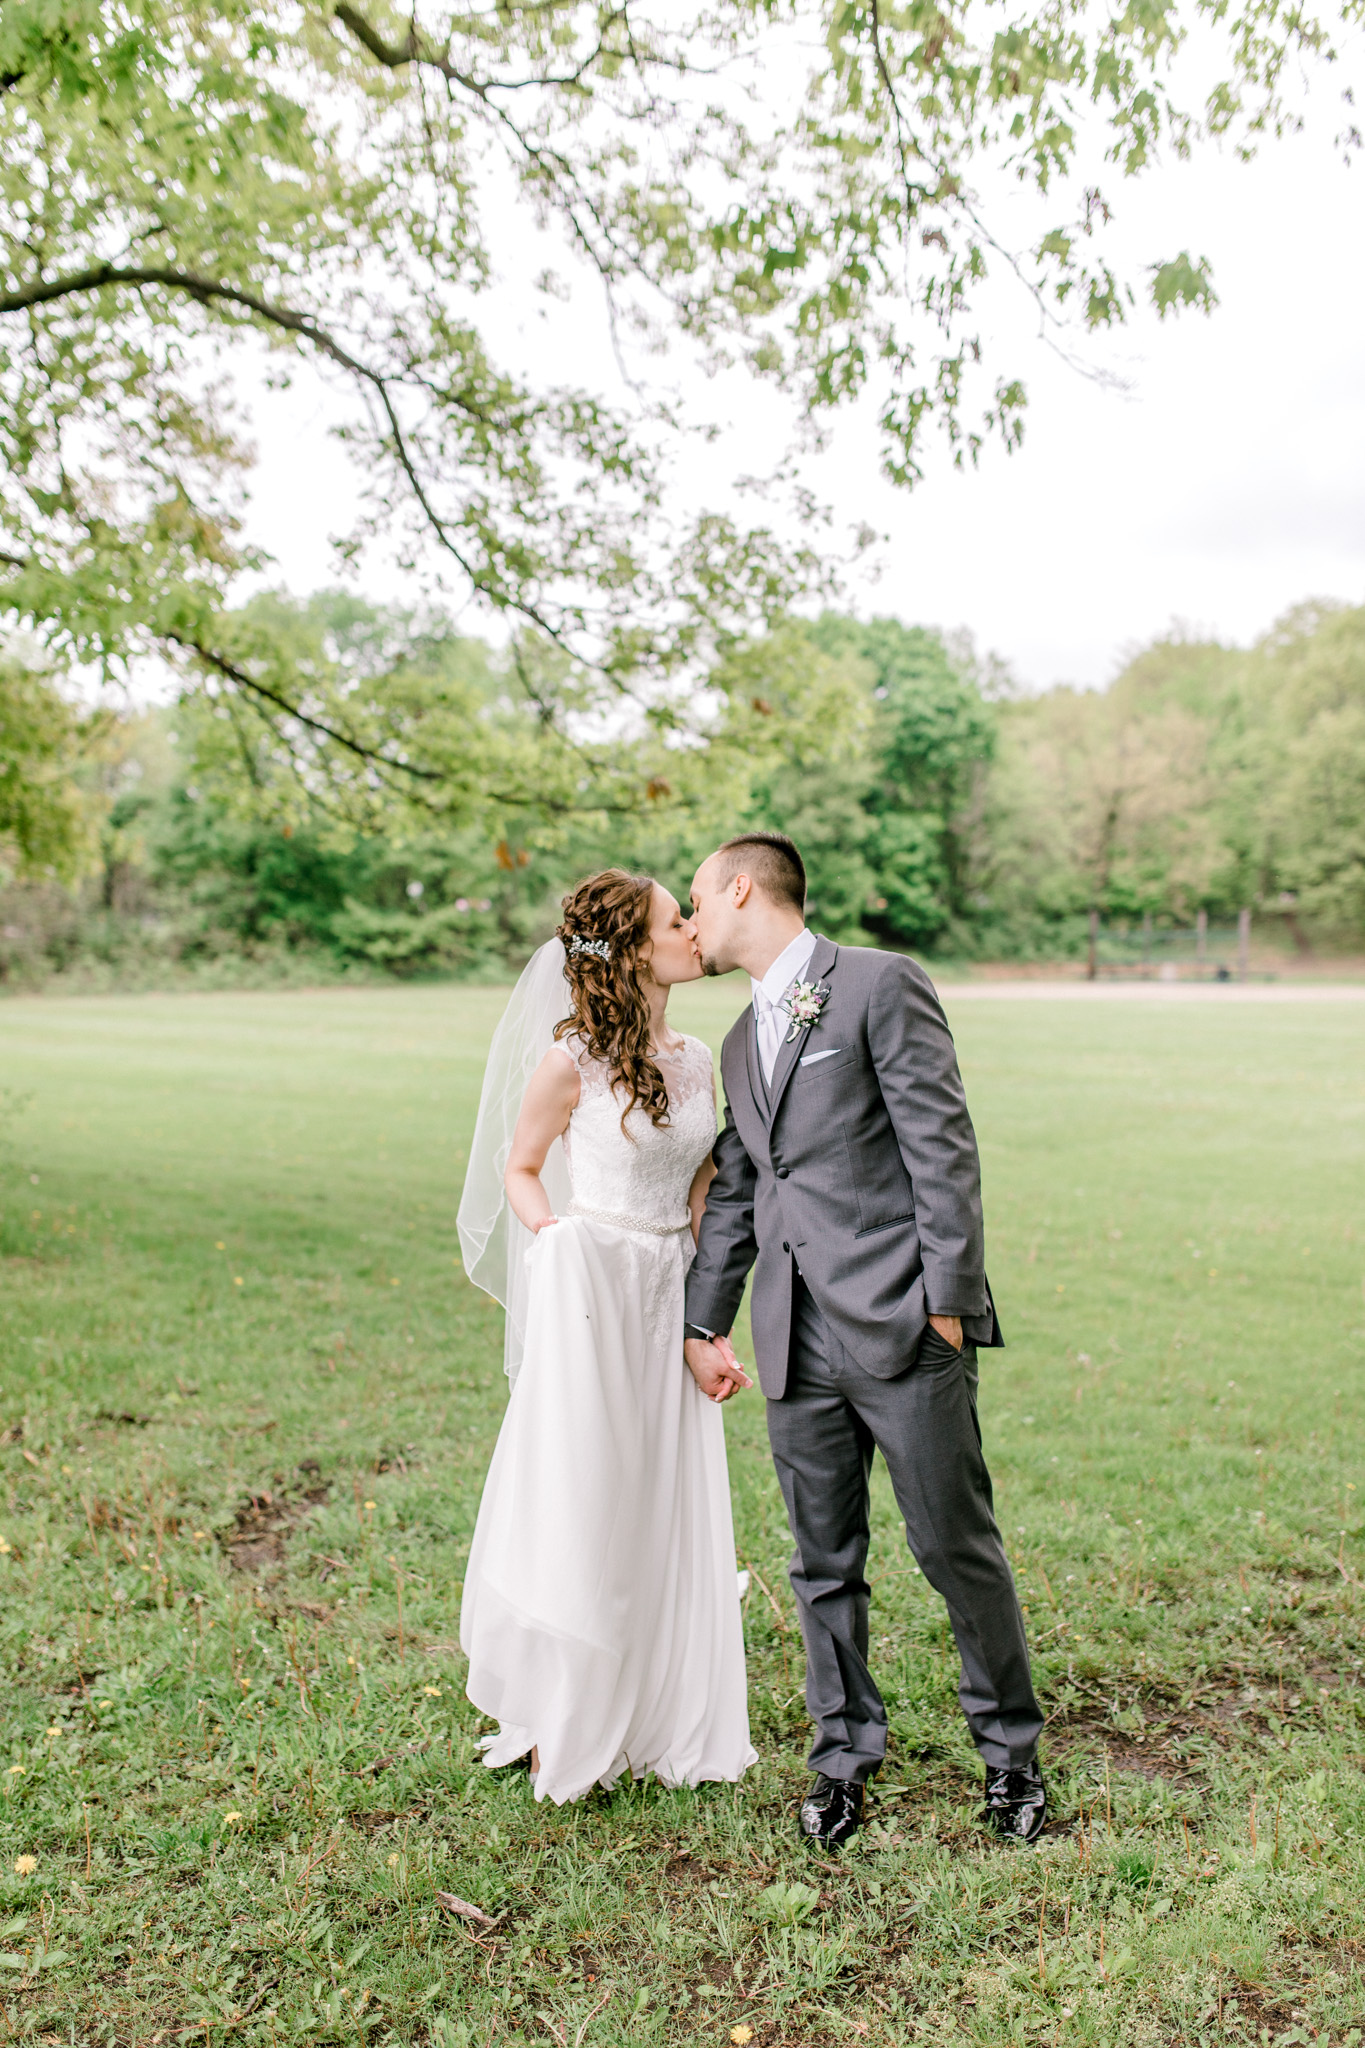 Beautiful Lavender Spring Wedding | Modern Bride | Laurenda Marie Photography | Michigan Weddings